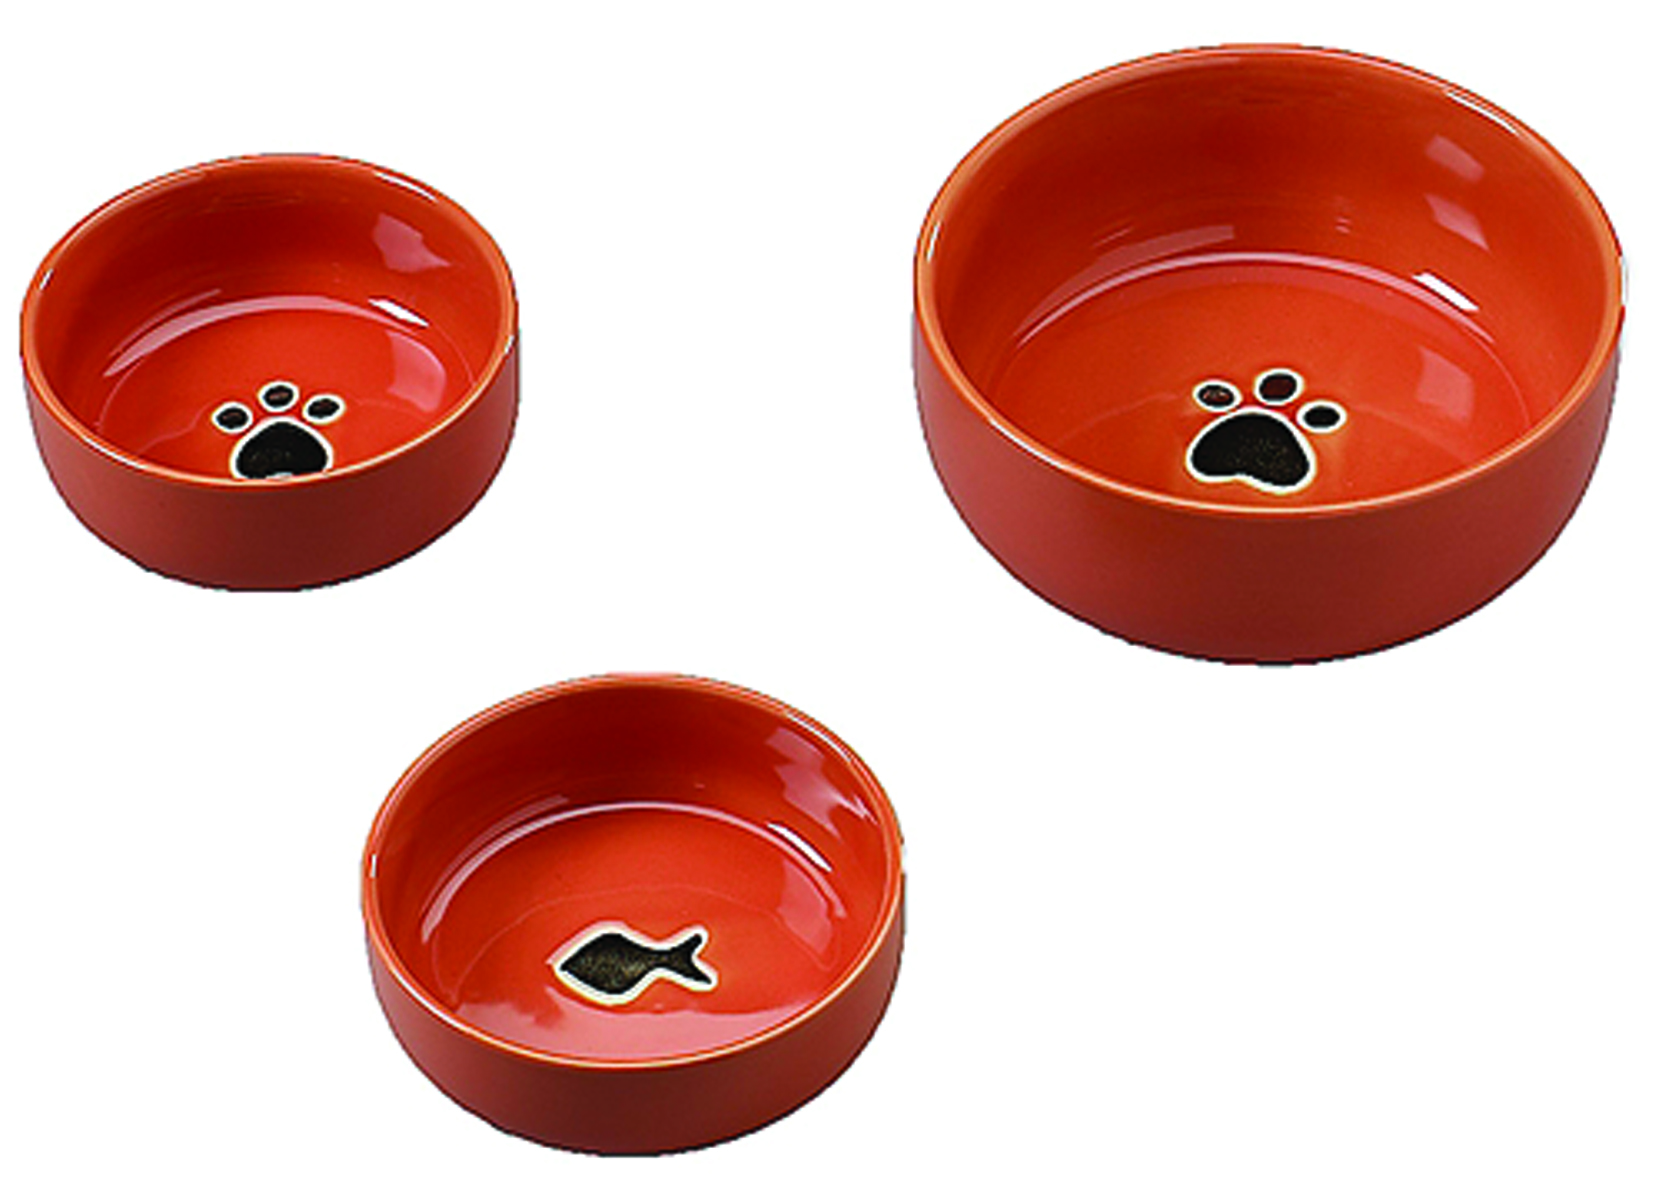 6.5" Ceramic Wide Rim Dog Dish - Tiger Design